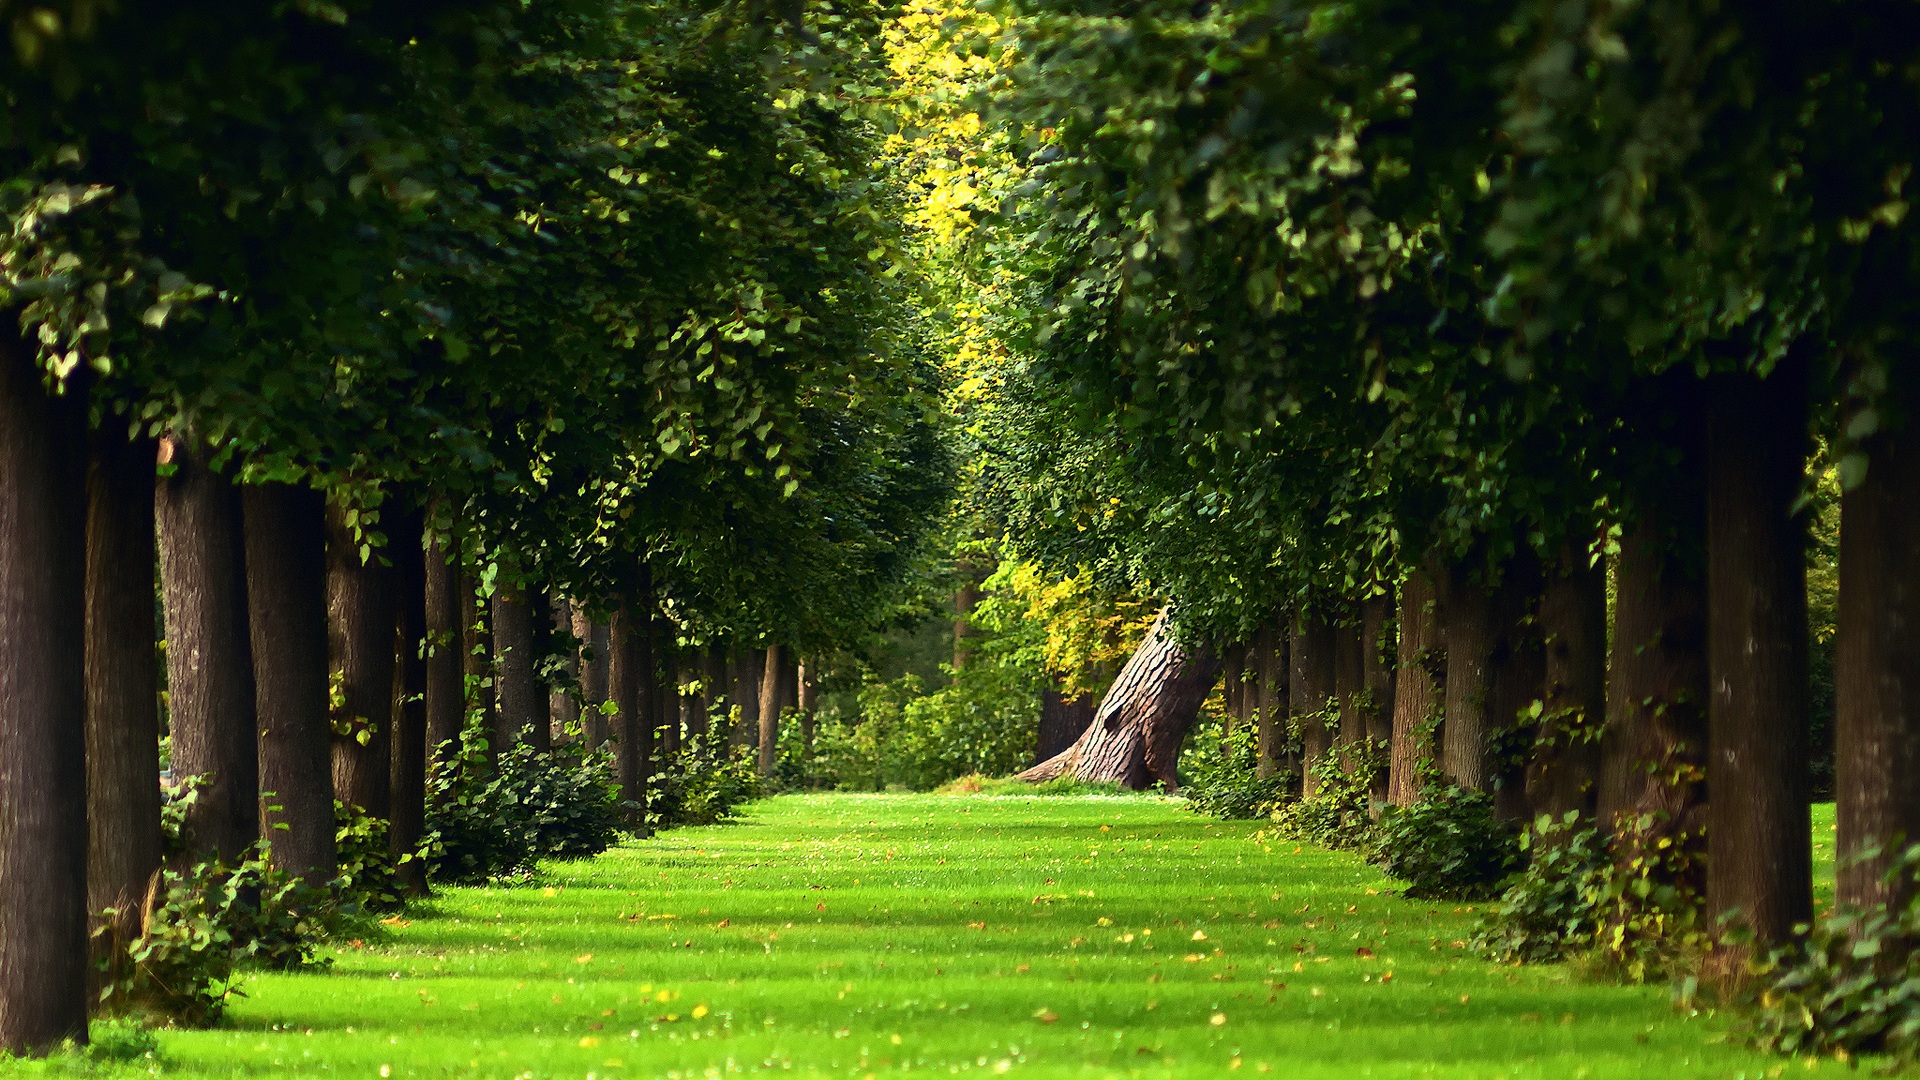 Superb Natural Green Park Free Wallpaper Image 16337 HD Wallpapers …